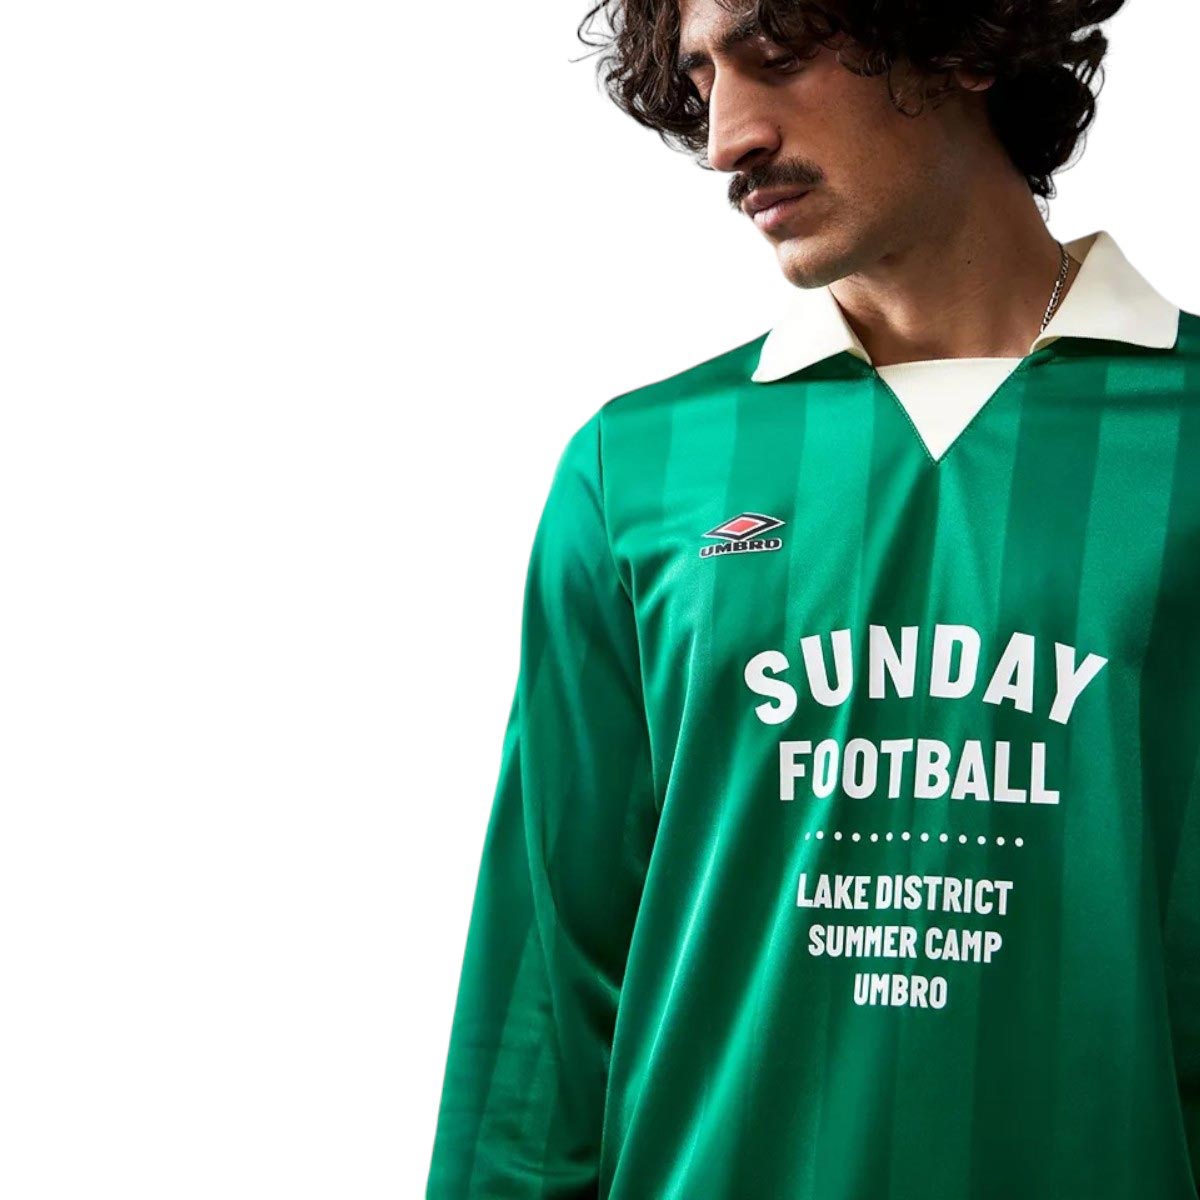 Umbro Big Print Mens Football Shirt